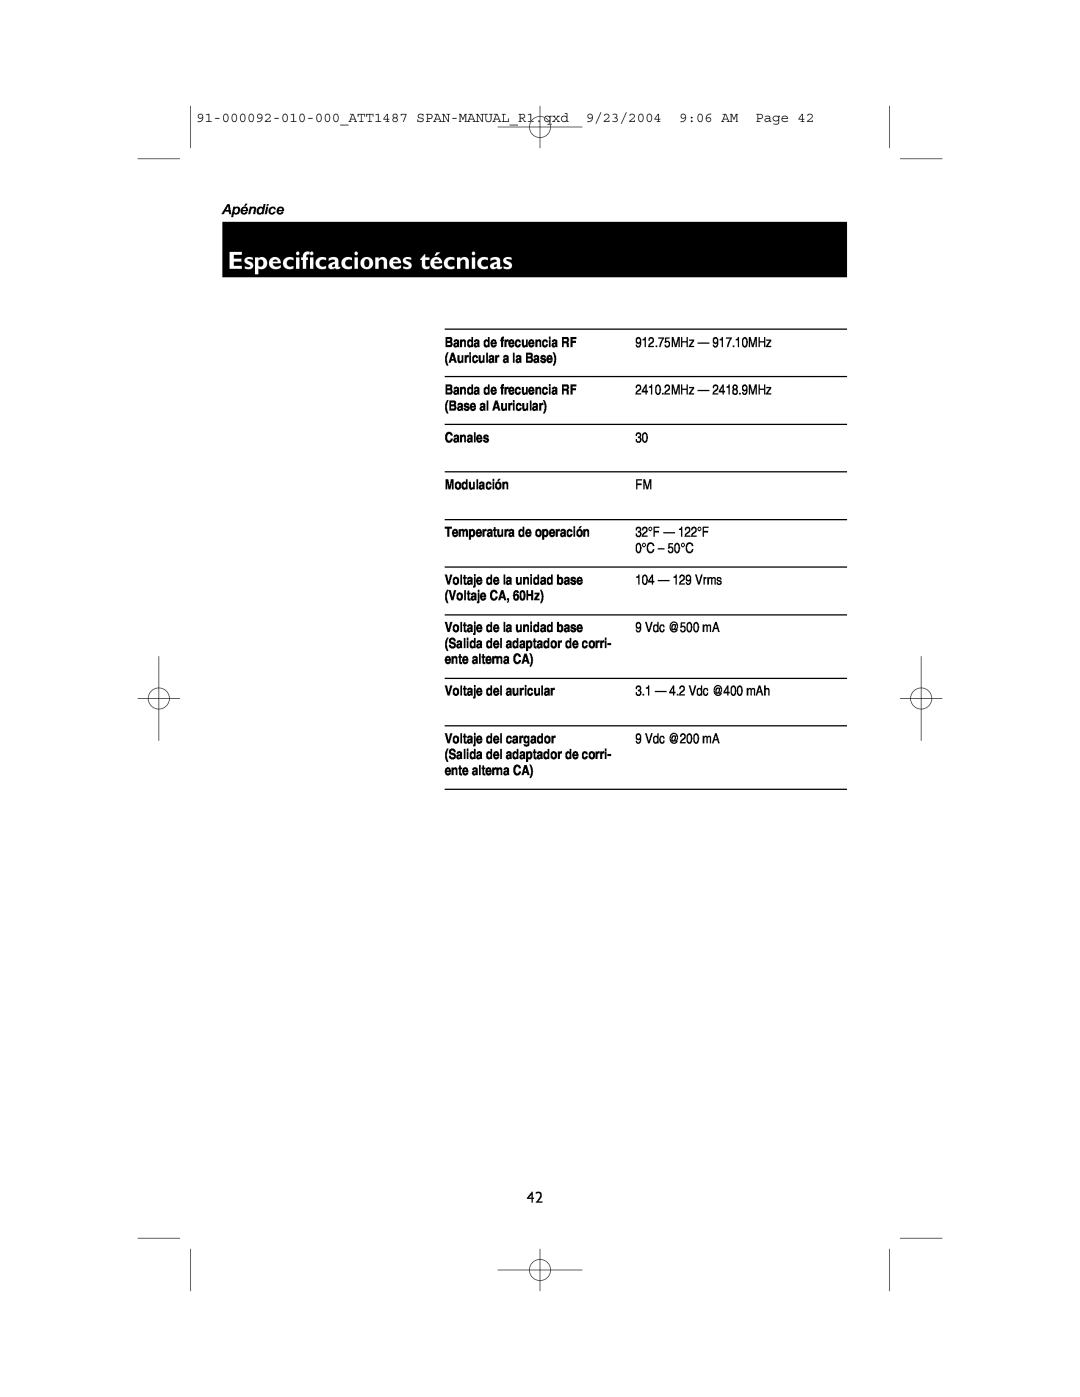 AT&T 1487, 1187 manual Especificaciones técnicas, Apéndice 